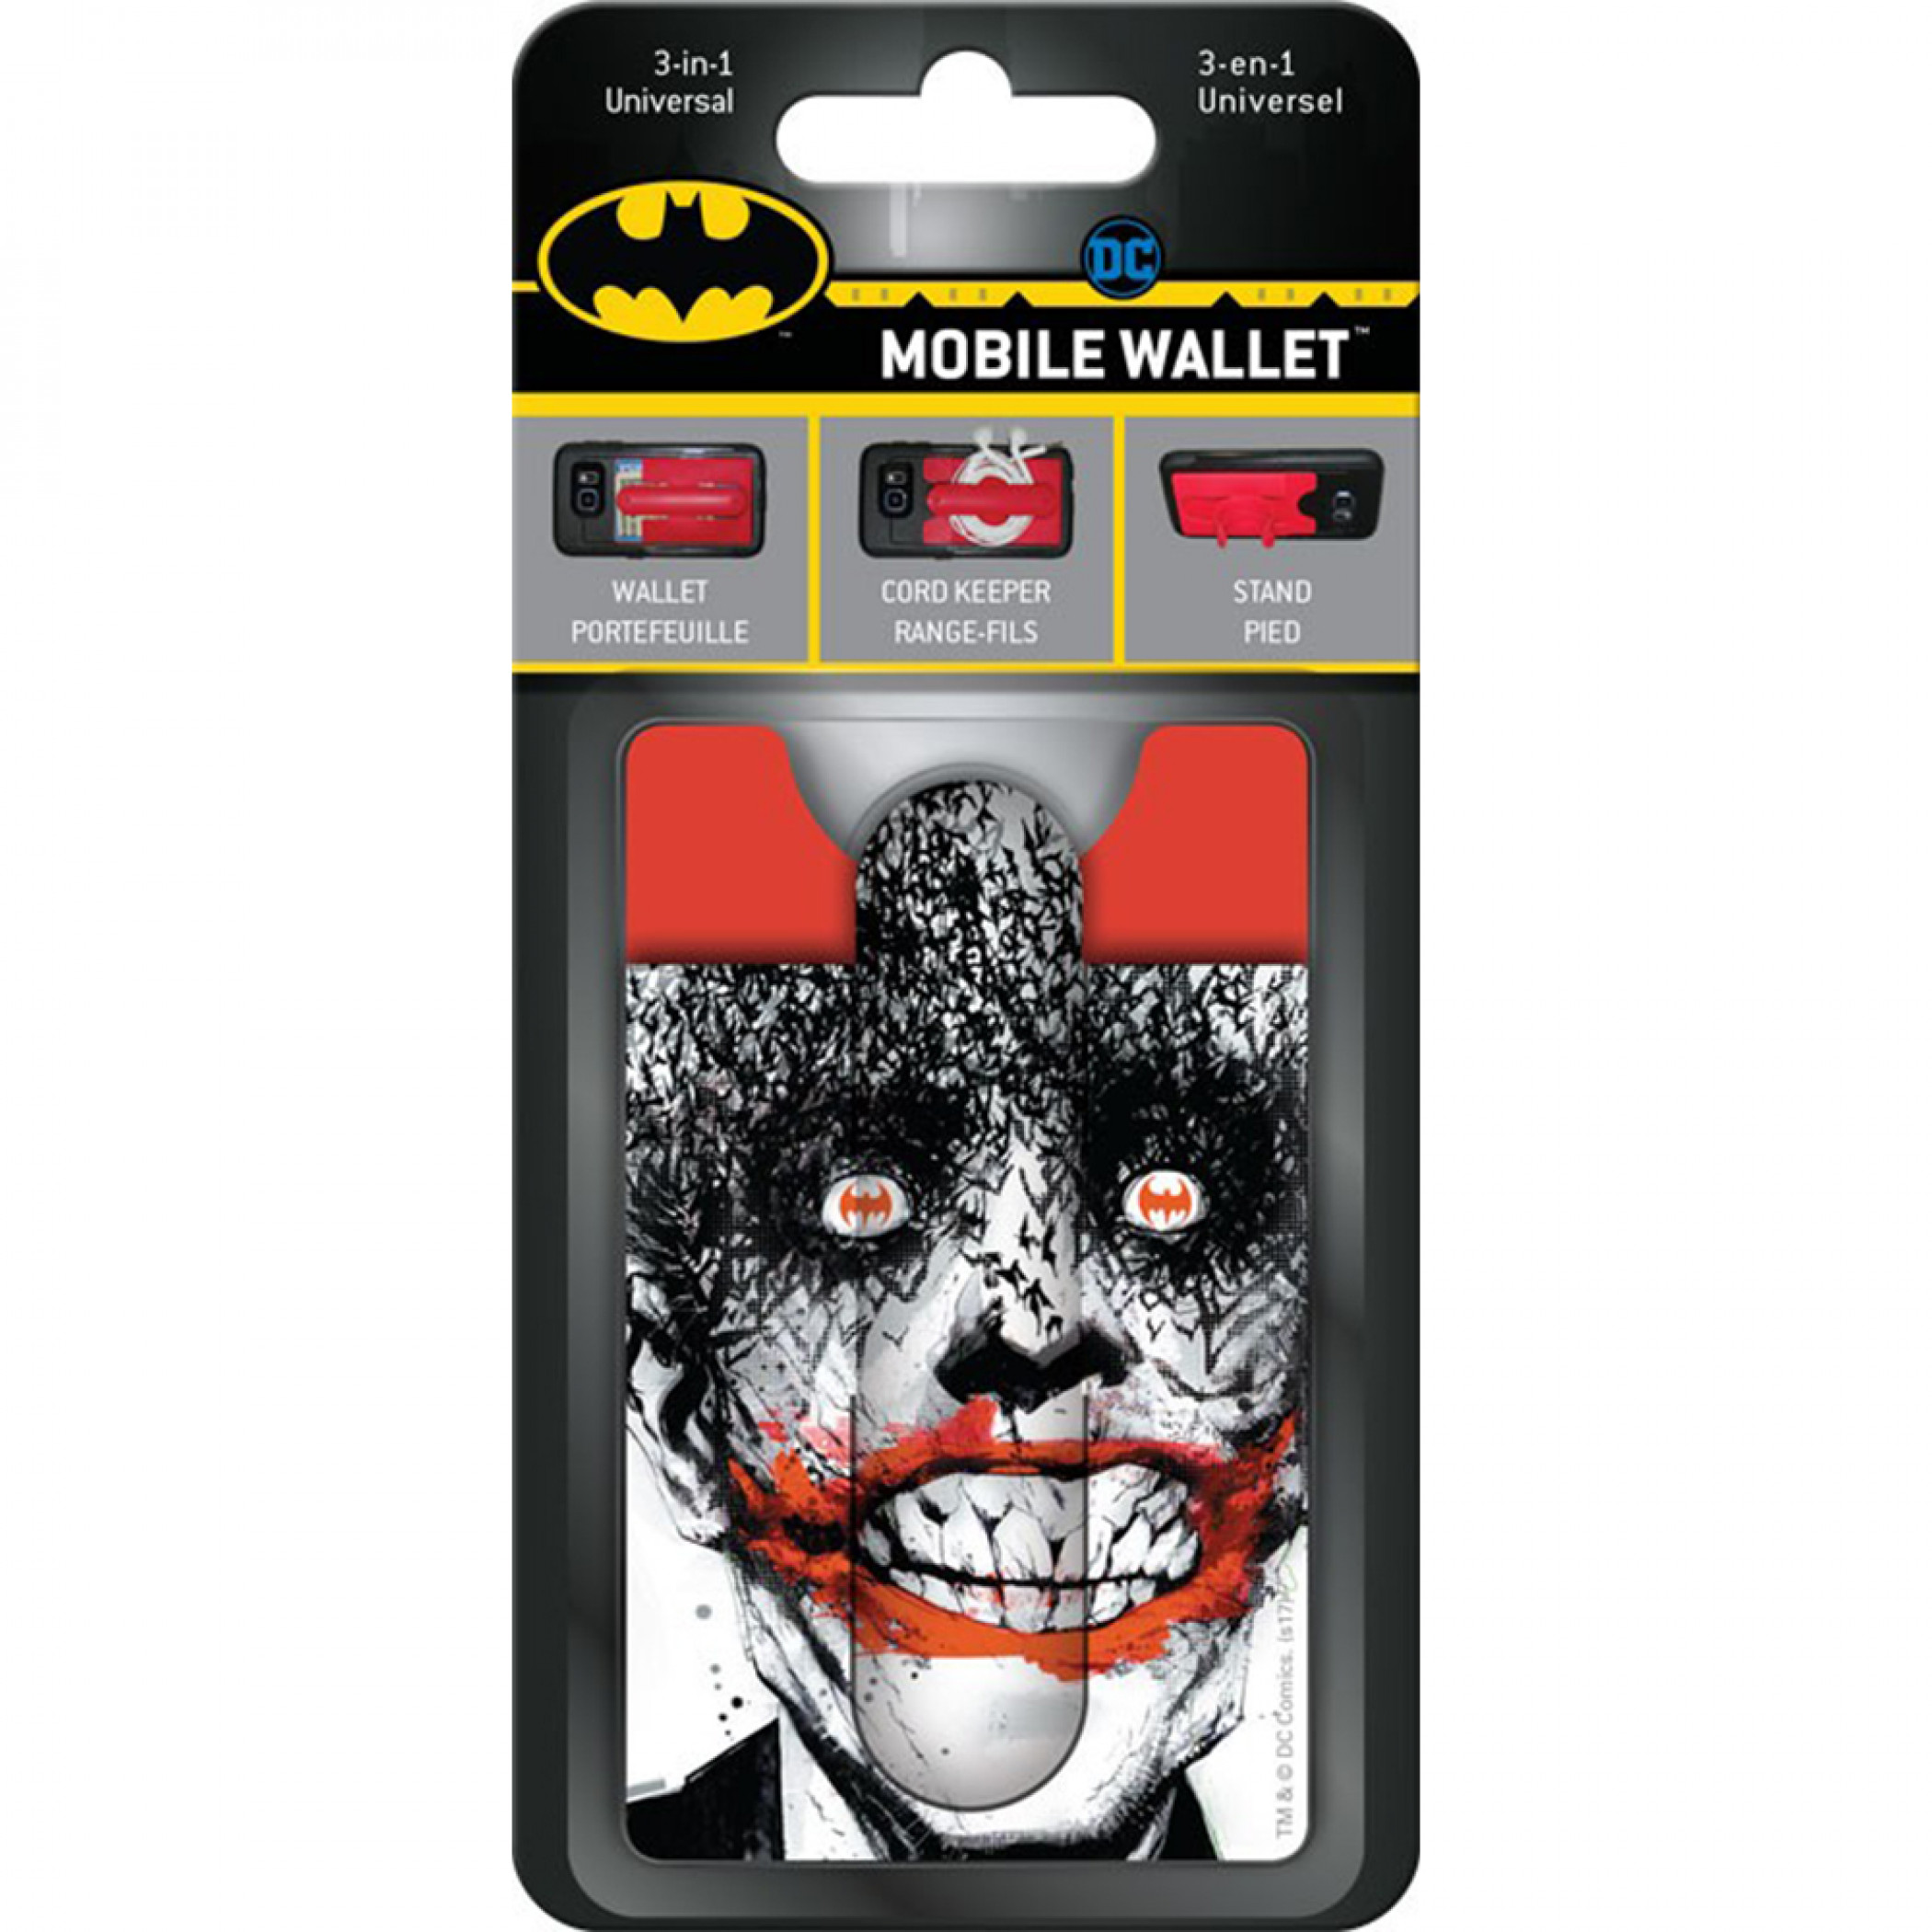 Joker Character Portrait Smile 3-in-1 Mobile Wallet